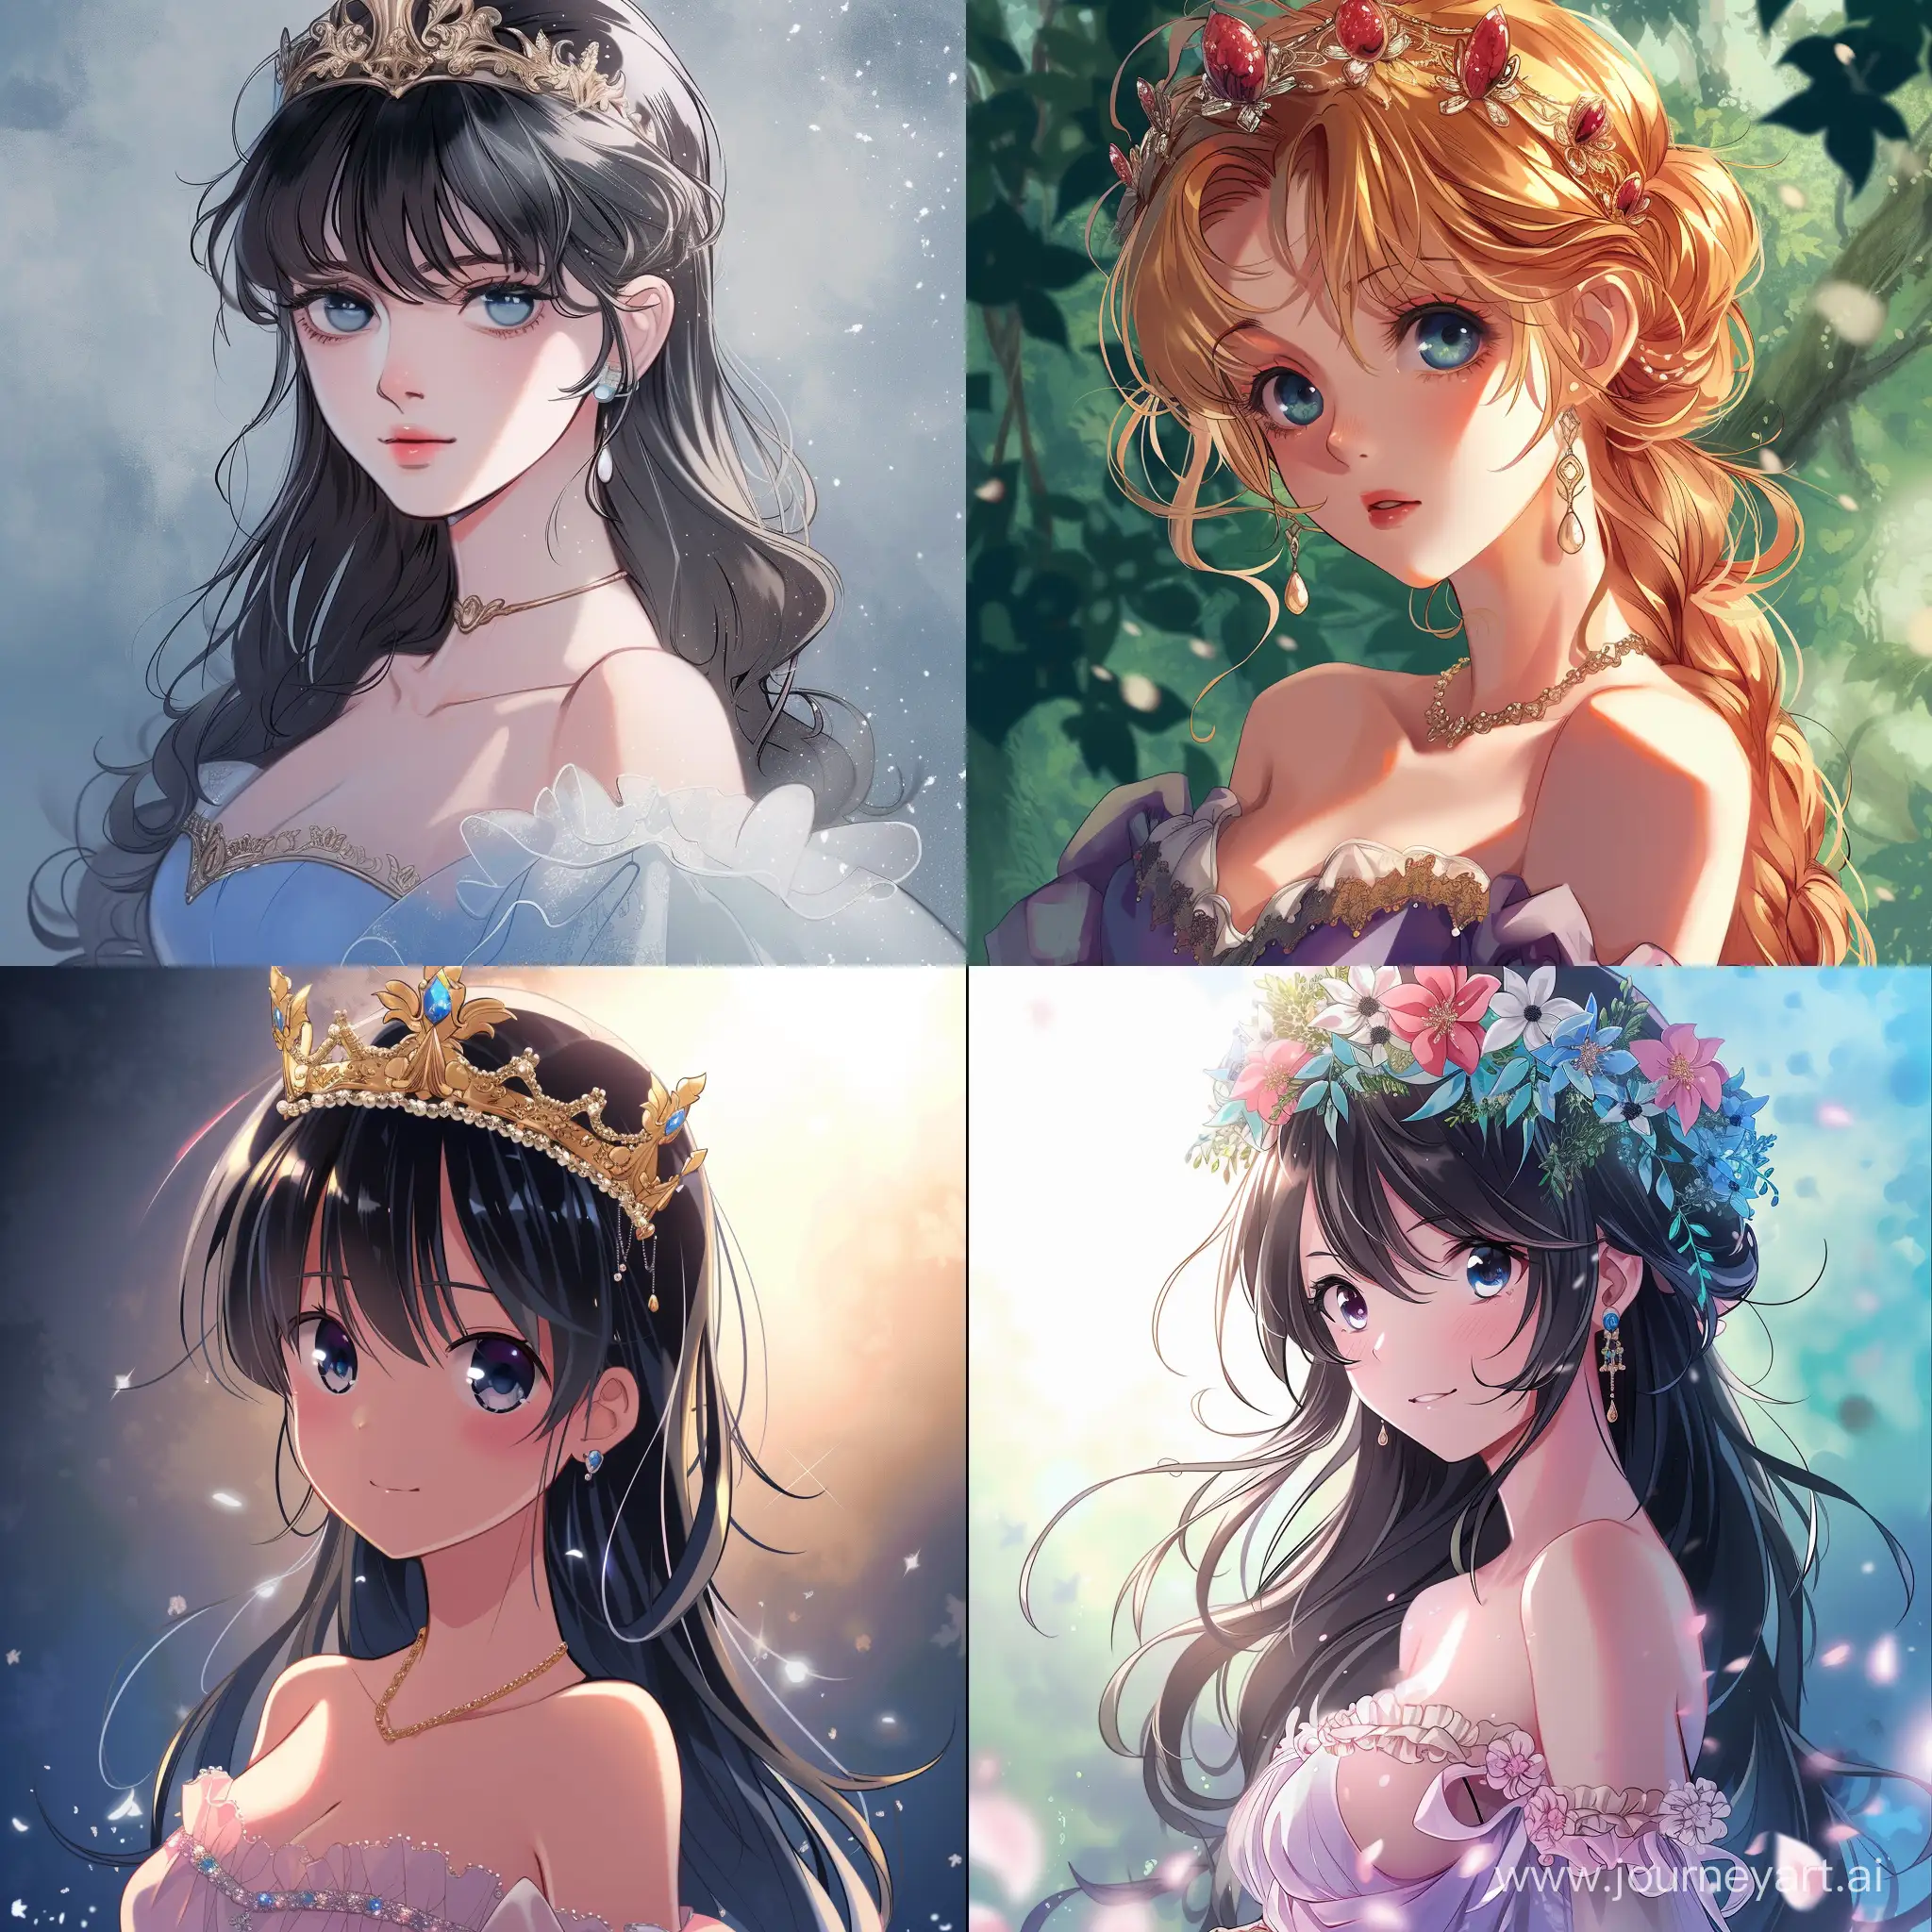 Enchanting-Anime-Princess-in-a-11-Aspect-Ratio-Fantasy